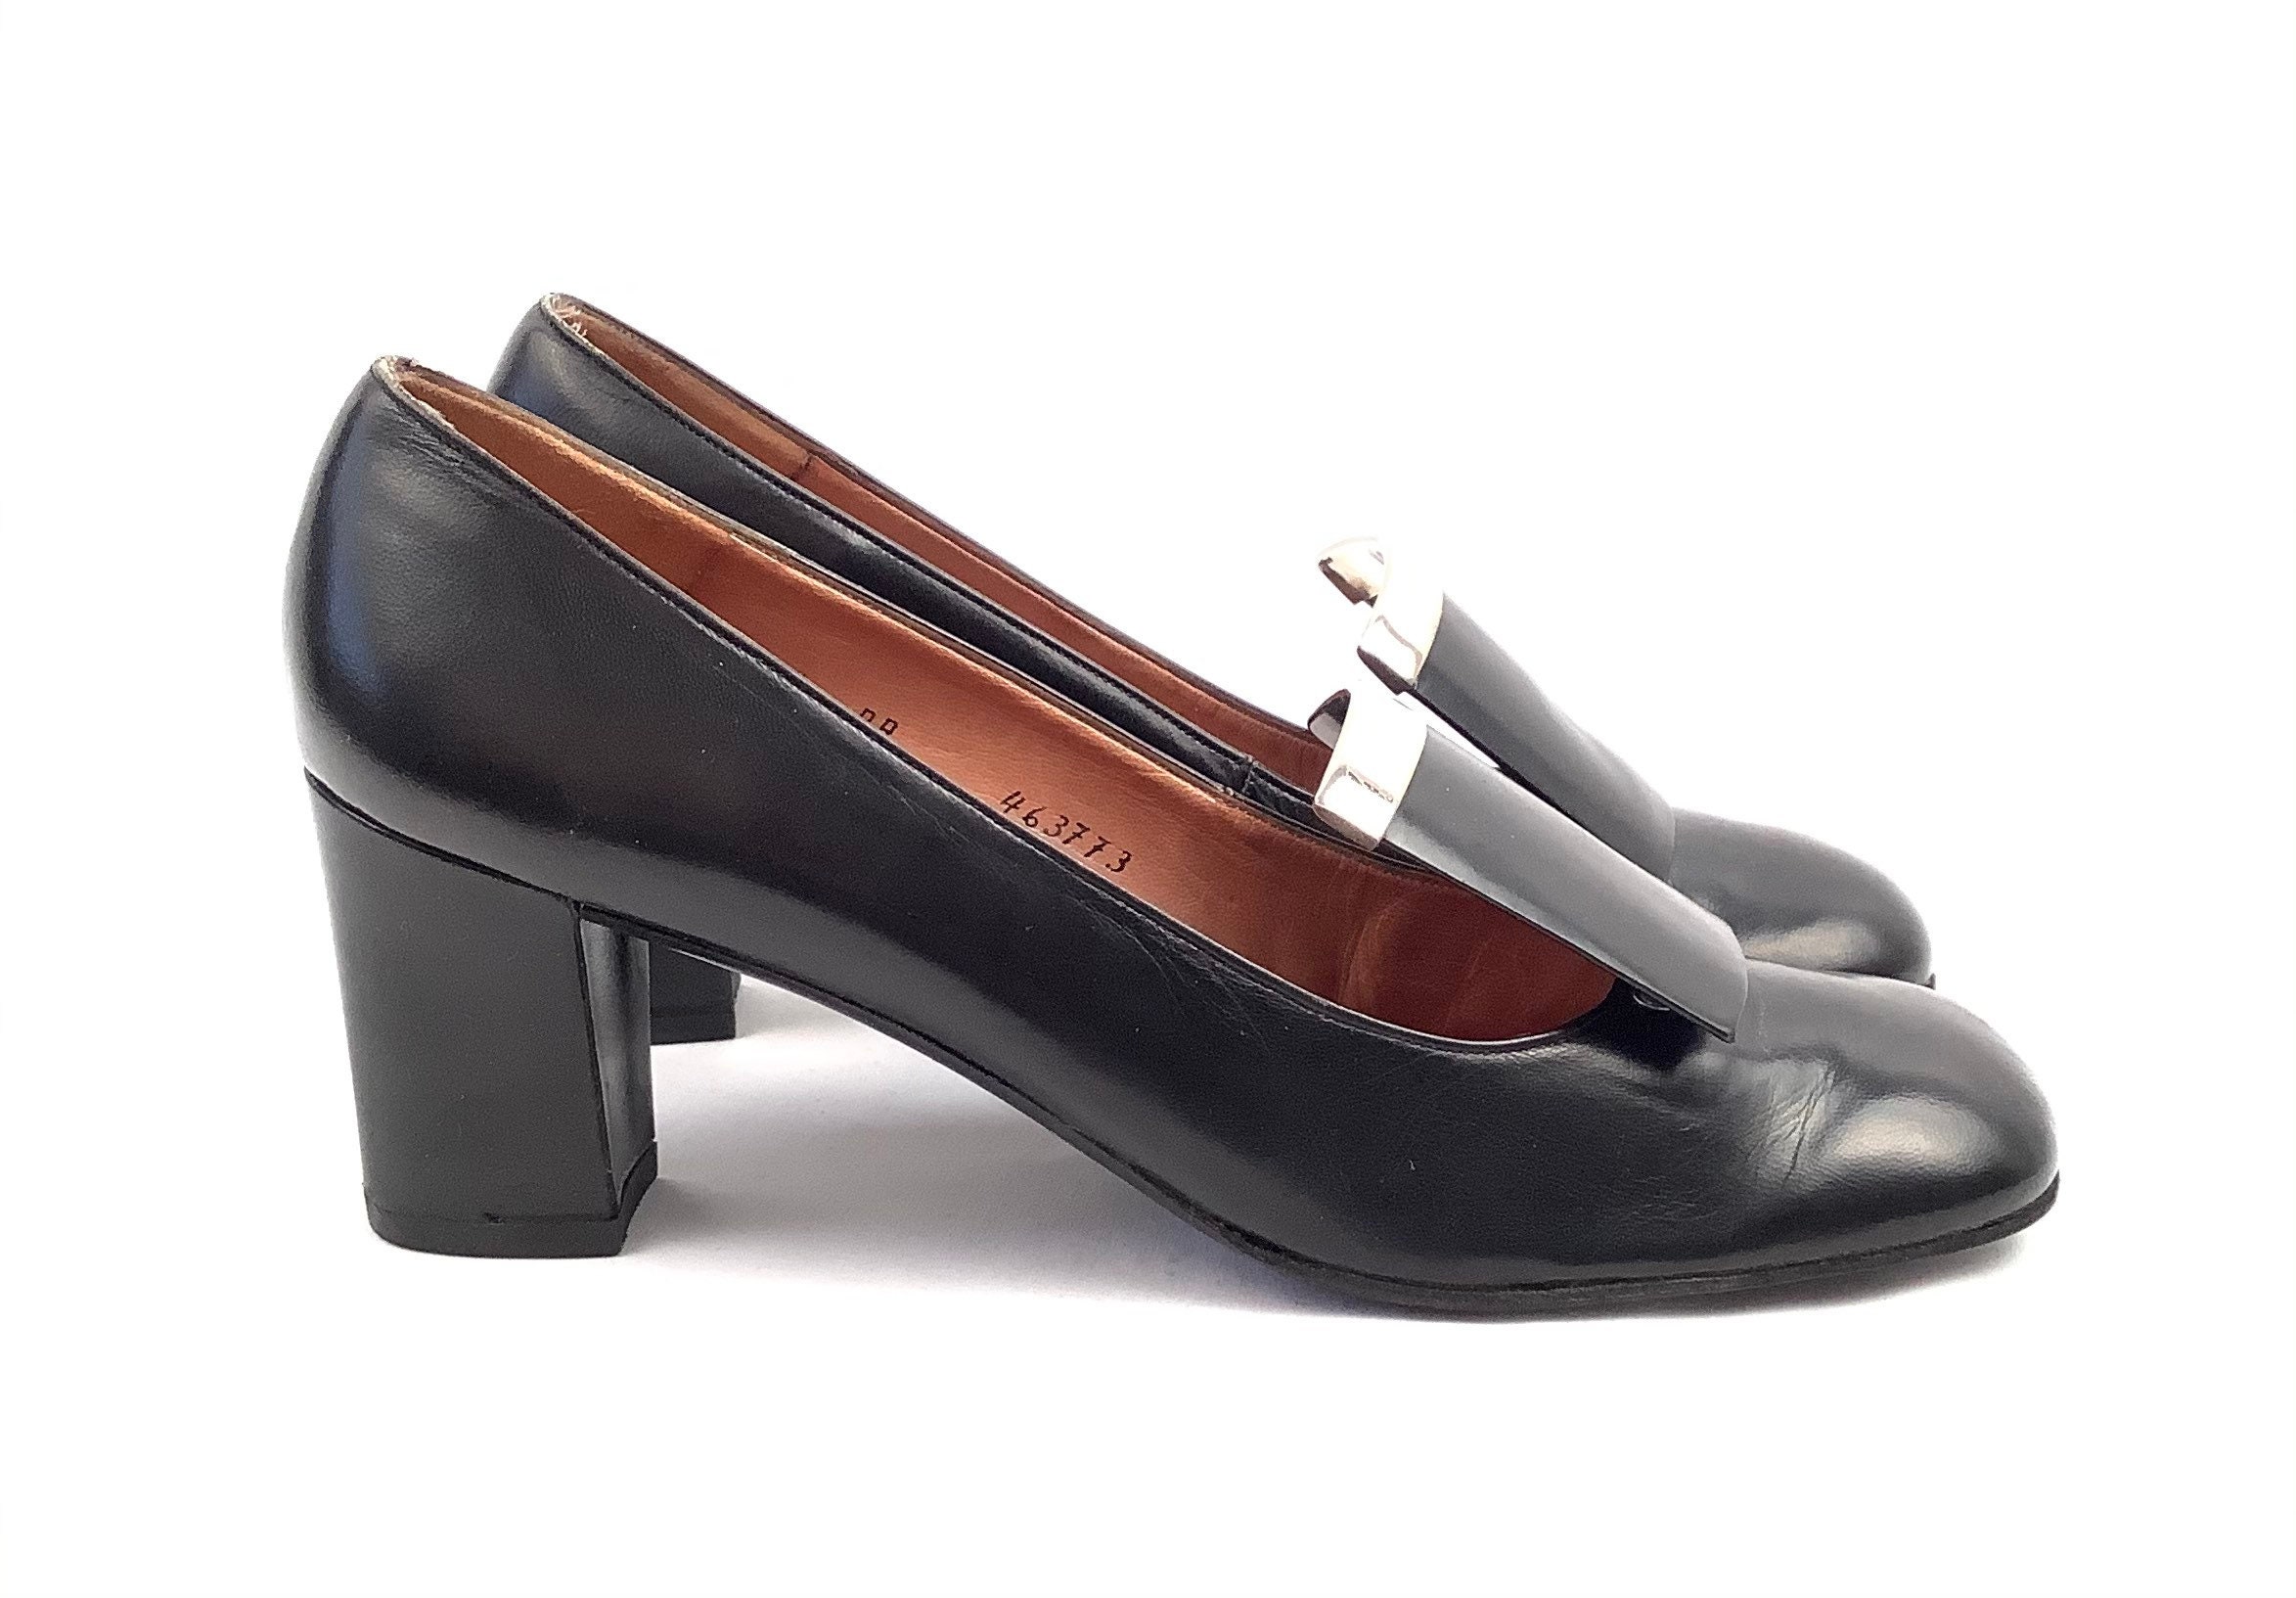 Vintage Christian Dior 60s Mod Heels Shoes Pumps Size 7.5 - Etsy